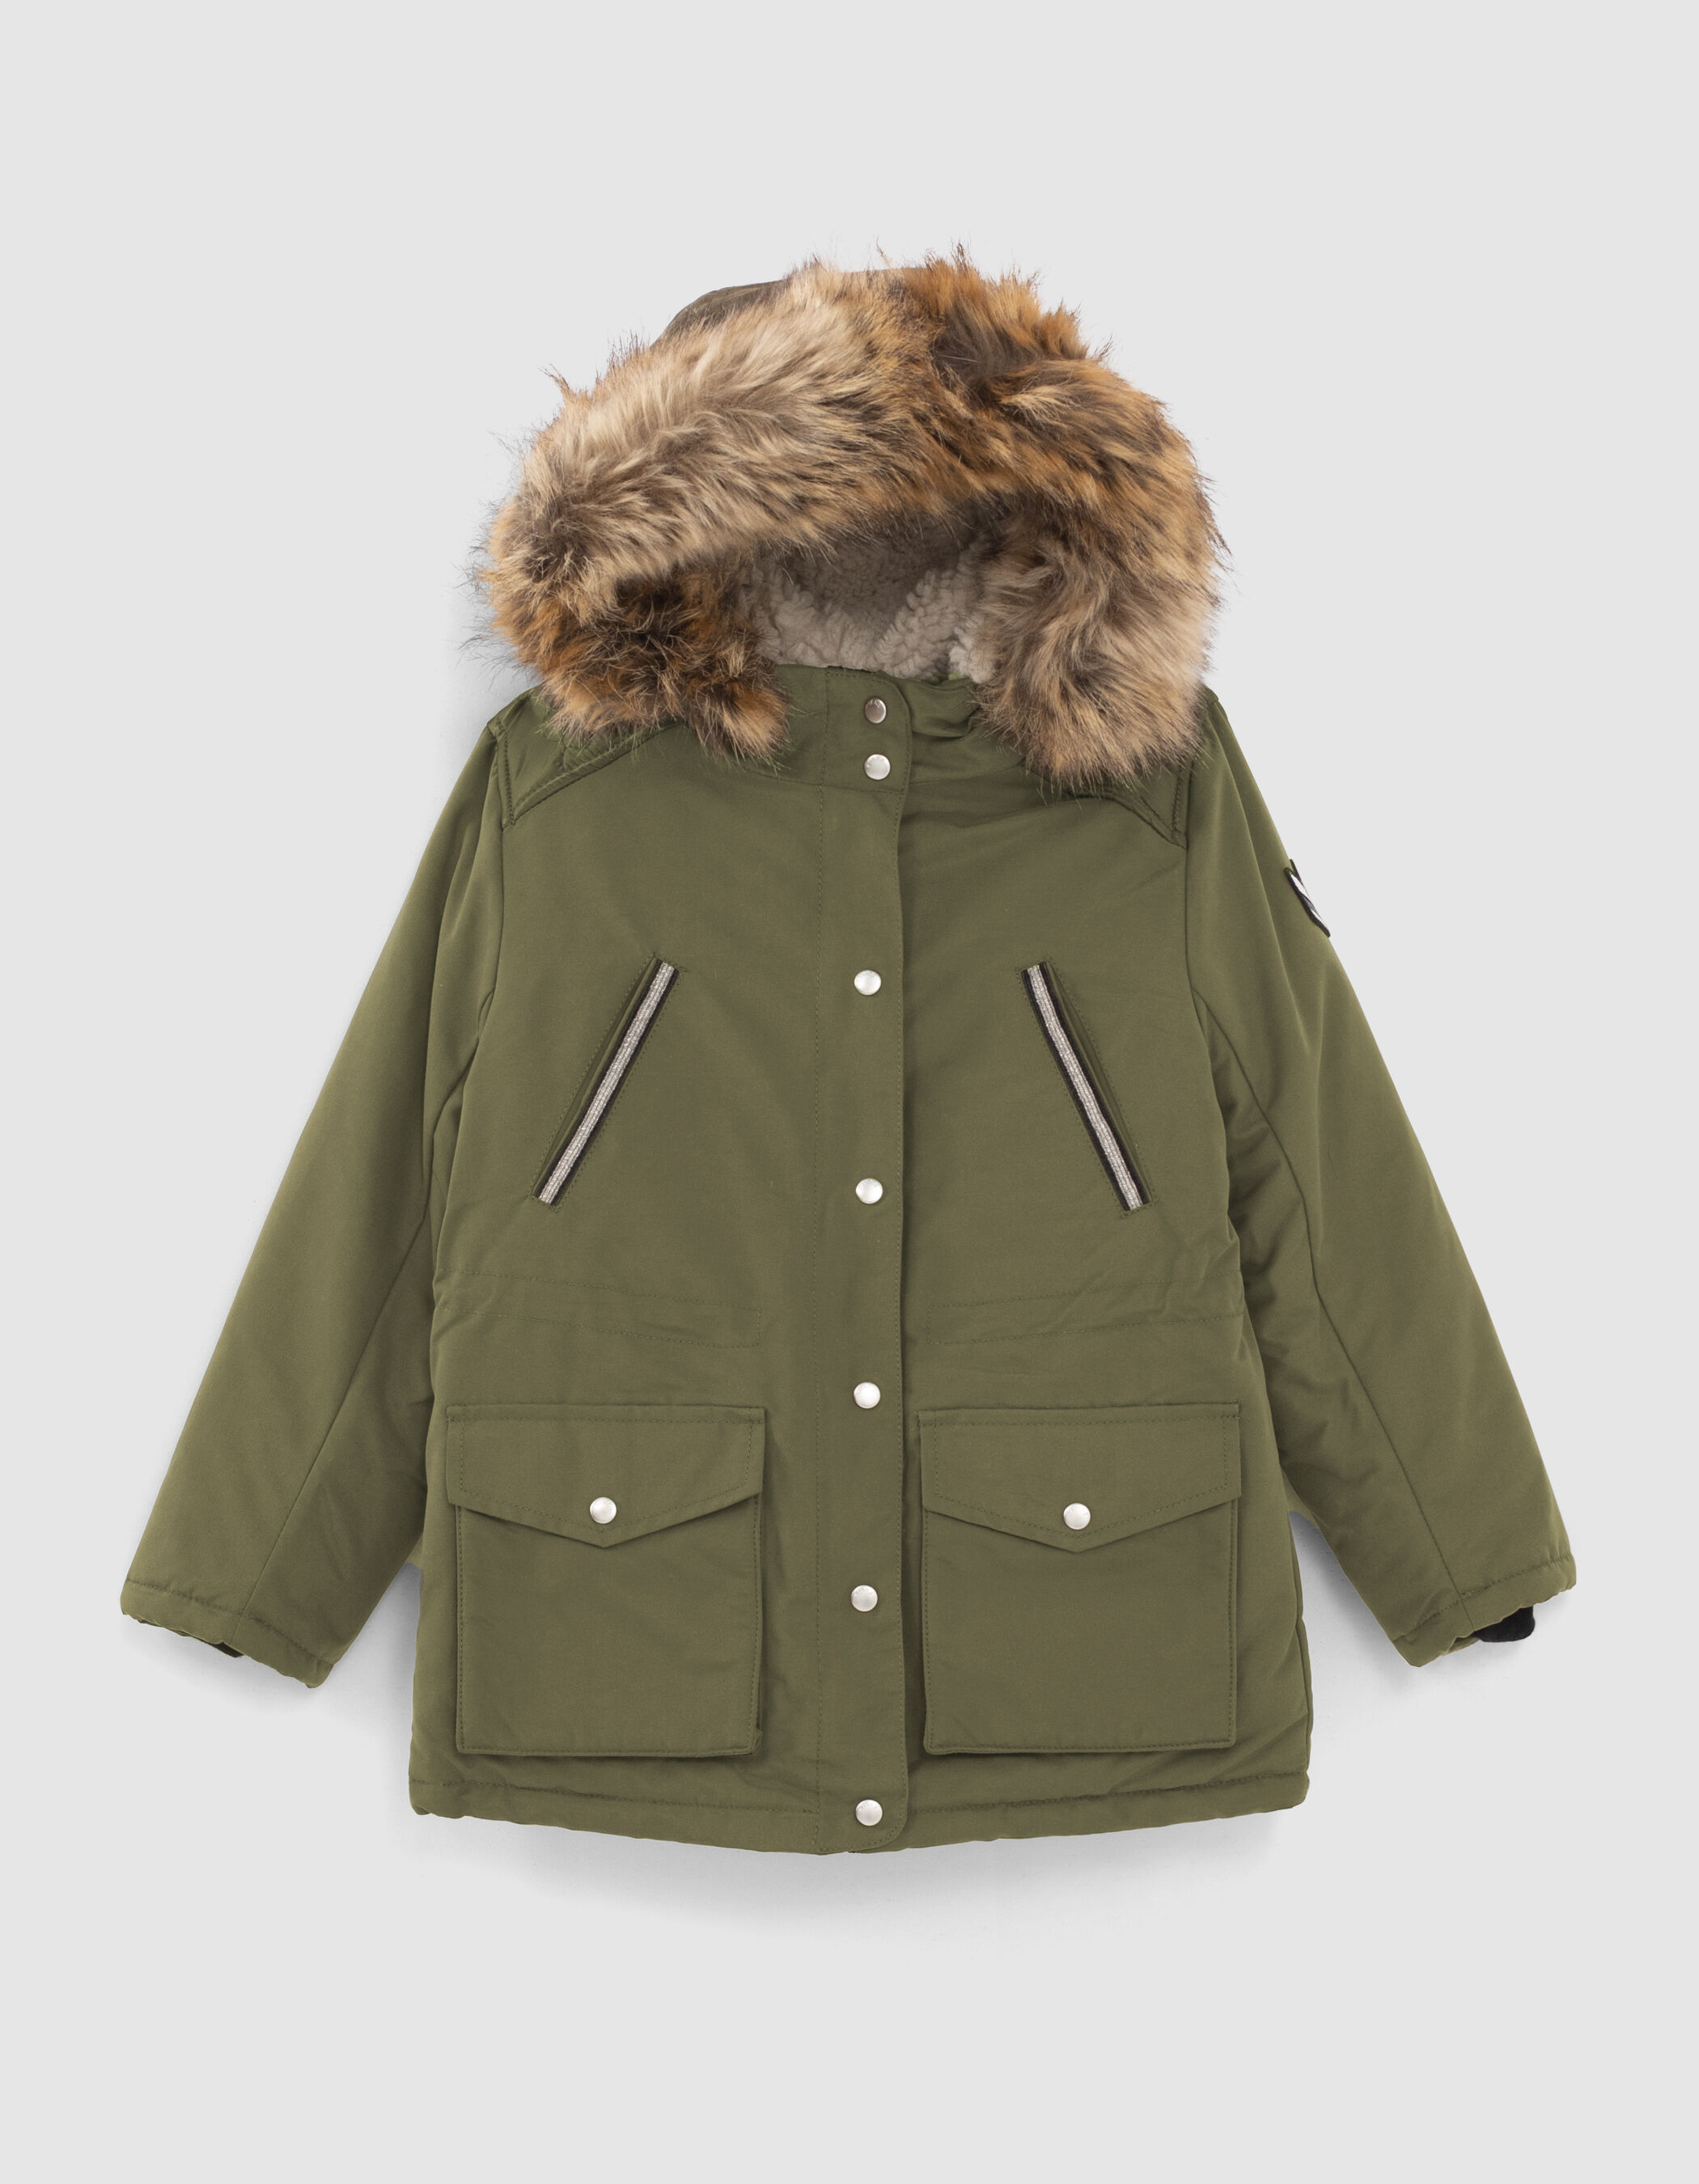 Girls’ khaki 3-in-1 parka, silver reversible bomber jacket